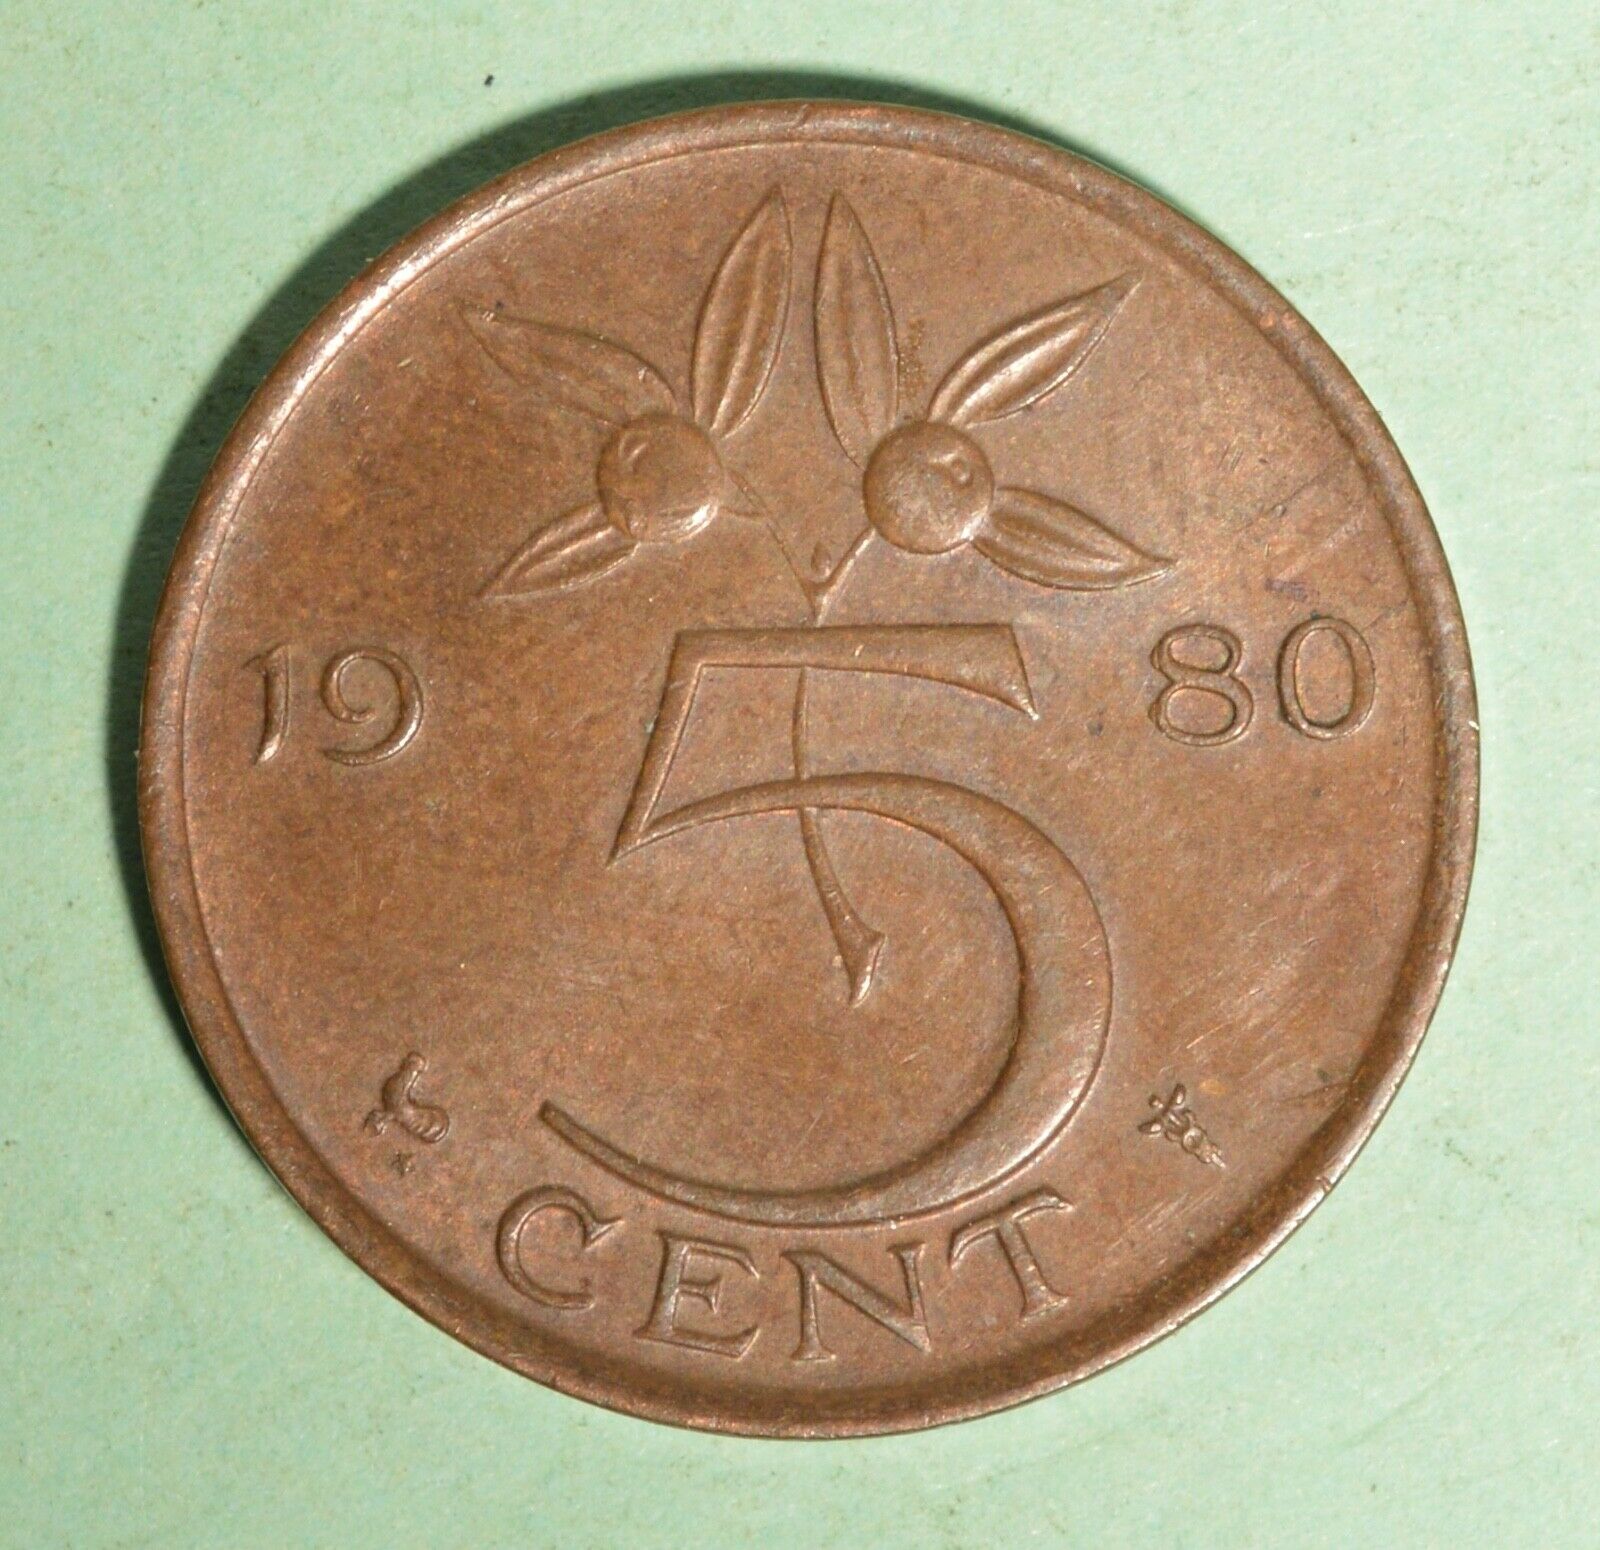 Netherland 5 Cent 1980 - INV# X-377